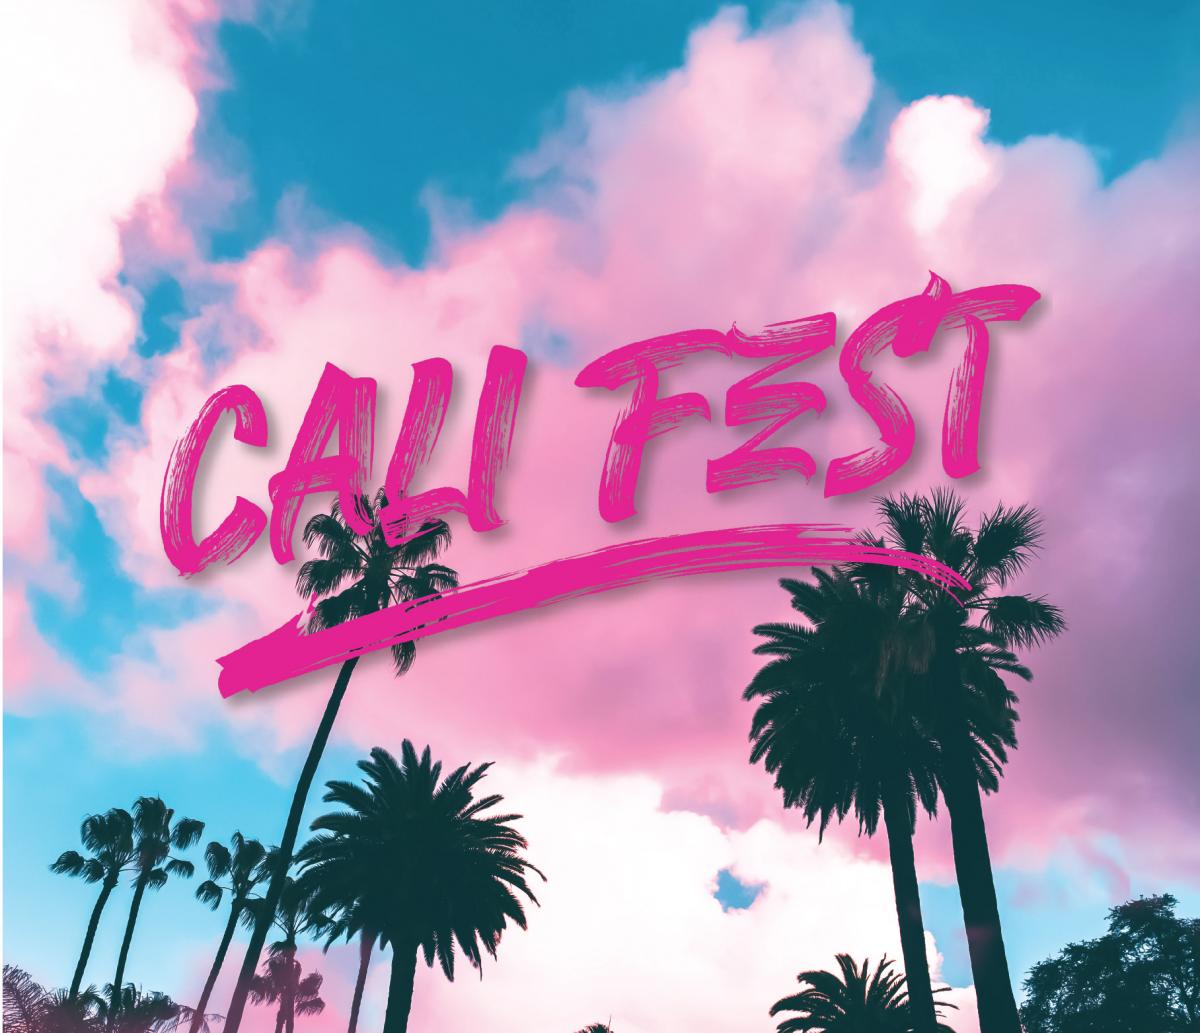 The Cali Fest  OCT 23'